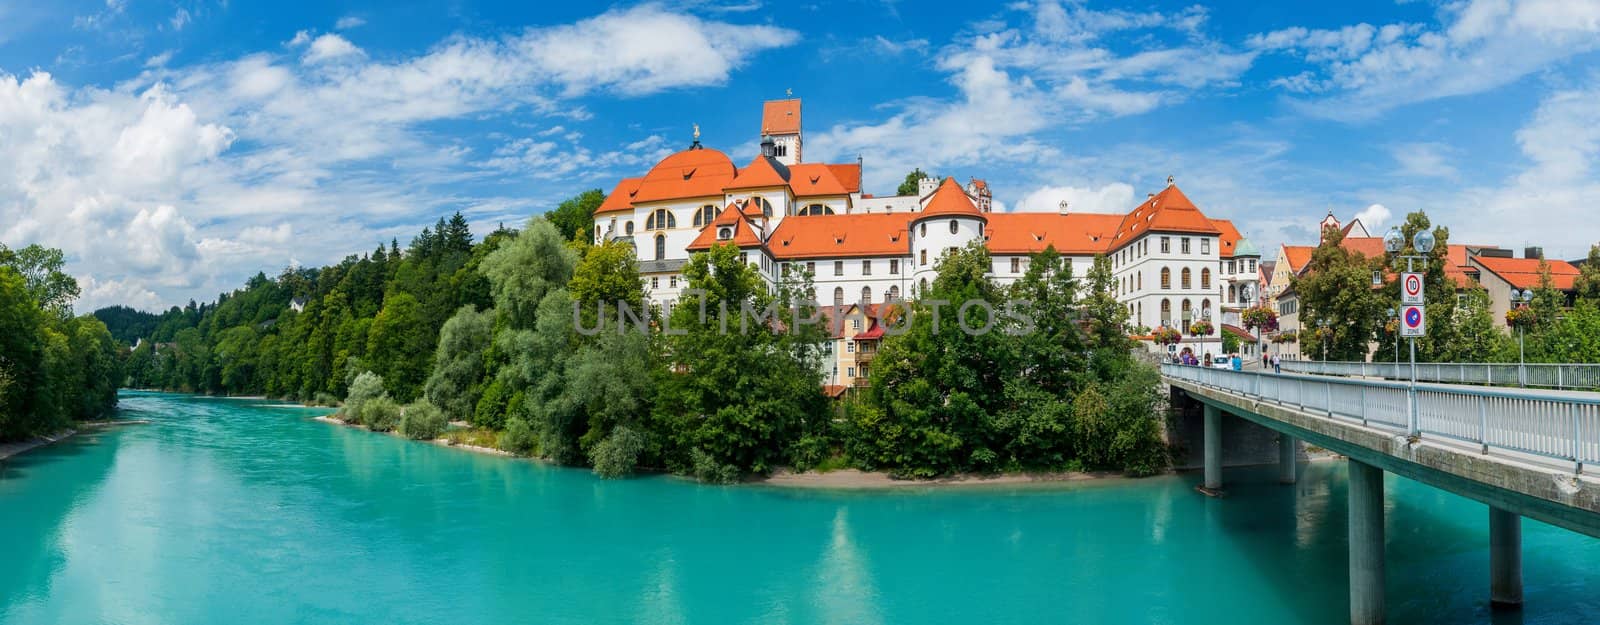 Castle in Bavarian Town Fuessen by maxoliki